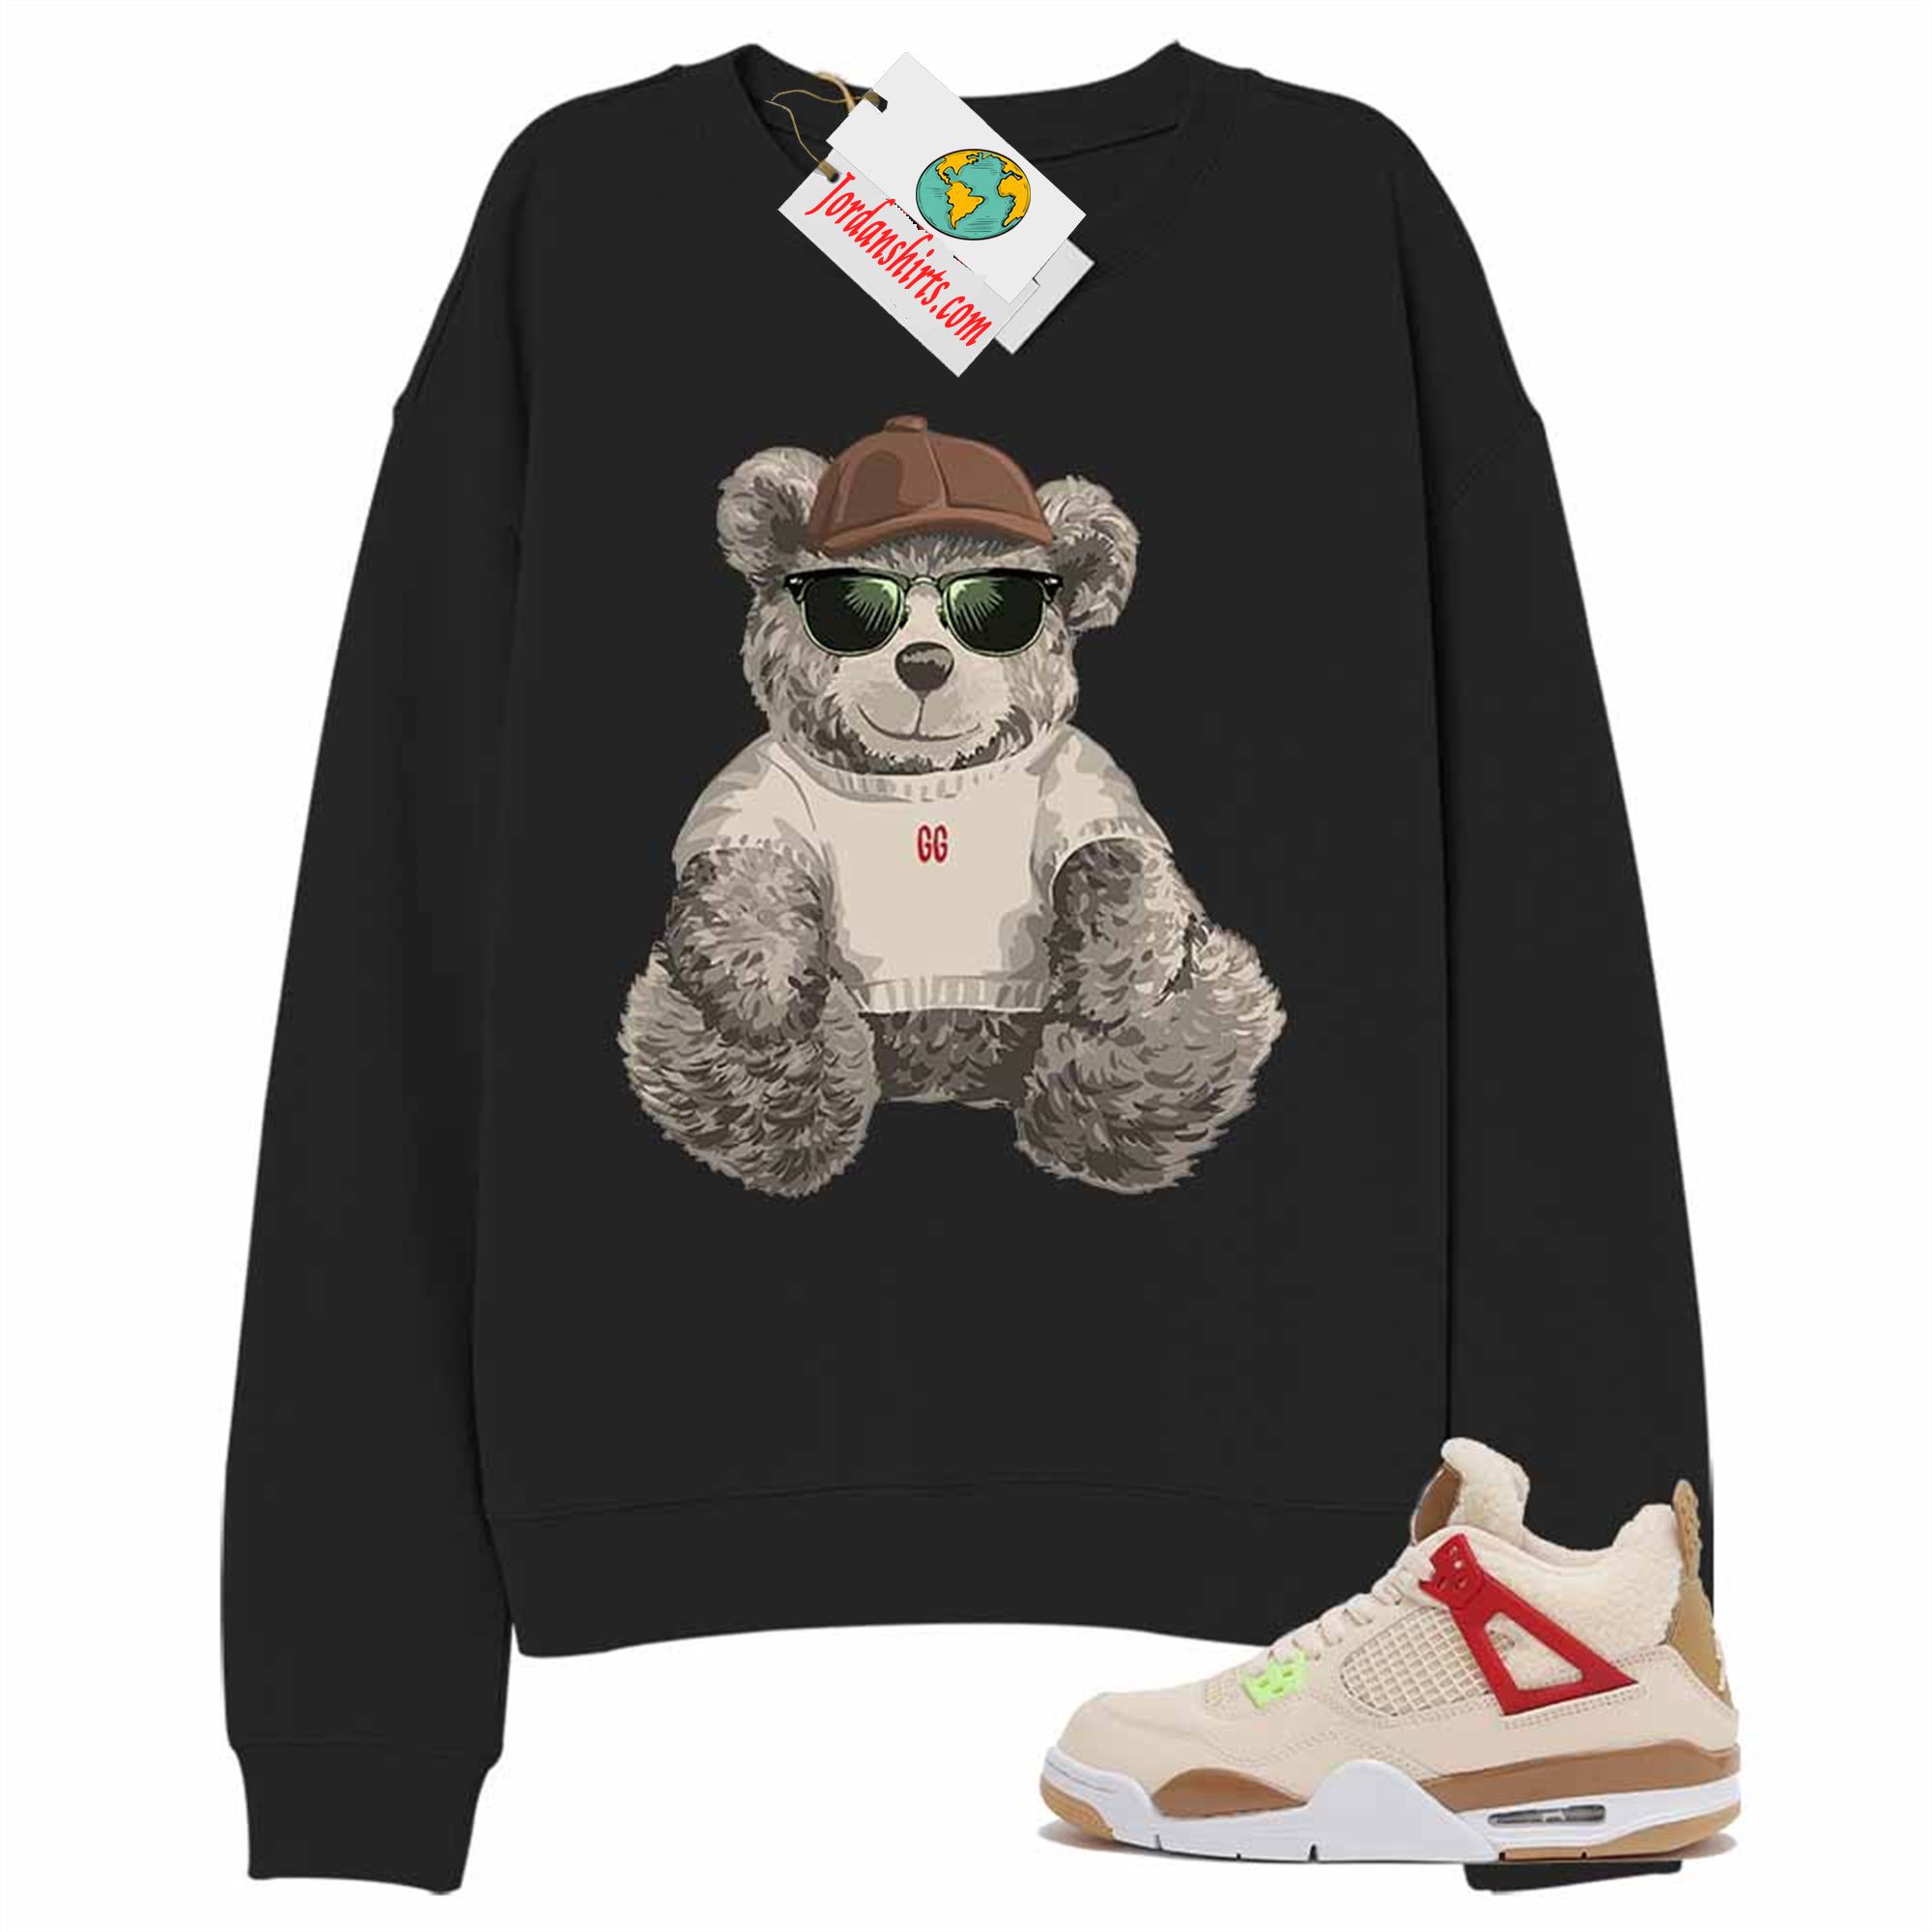 Jordan 4 Sweatshirt, Teddy Bear With Sunglasses _ Hat Black Sweatshirt Air Jordan 4 Gg Wild Things 4s Size Up To 5xl